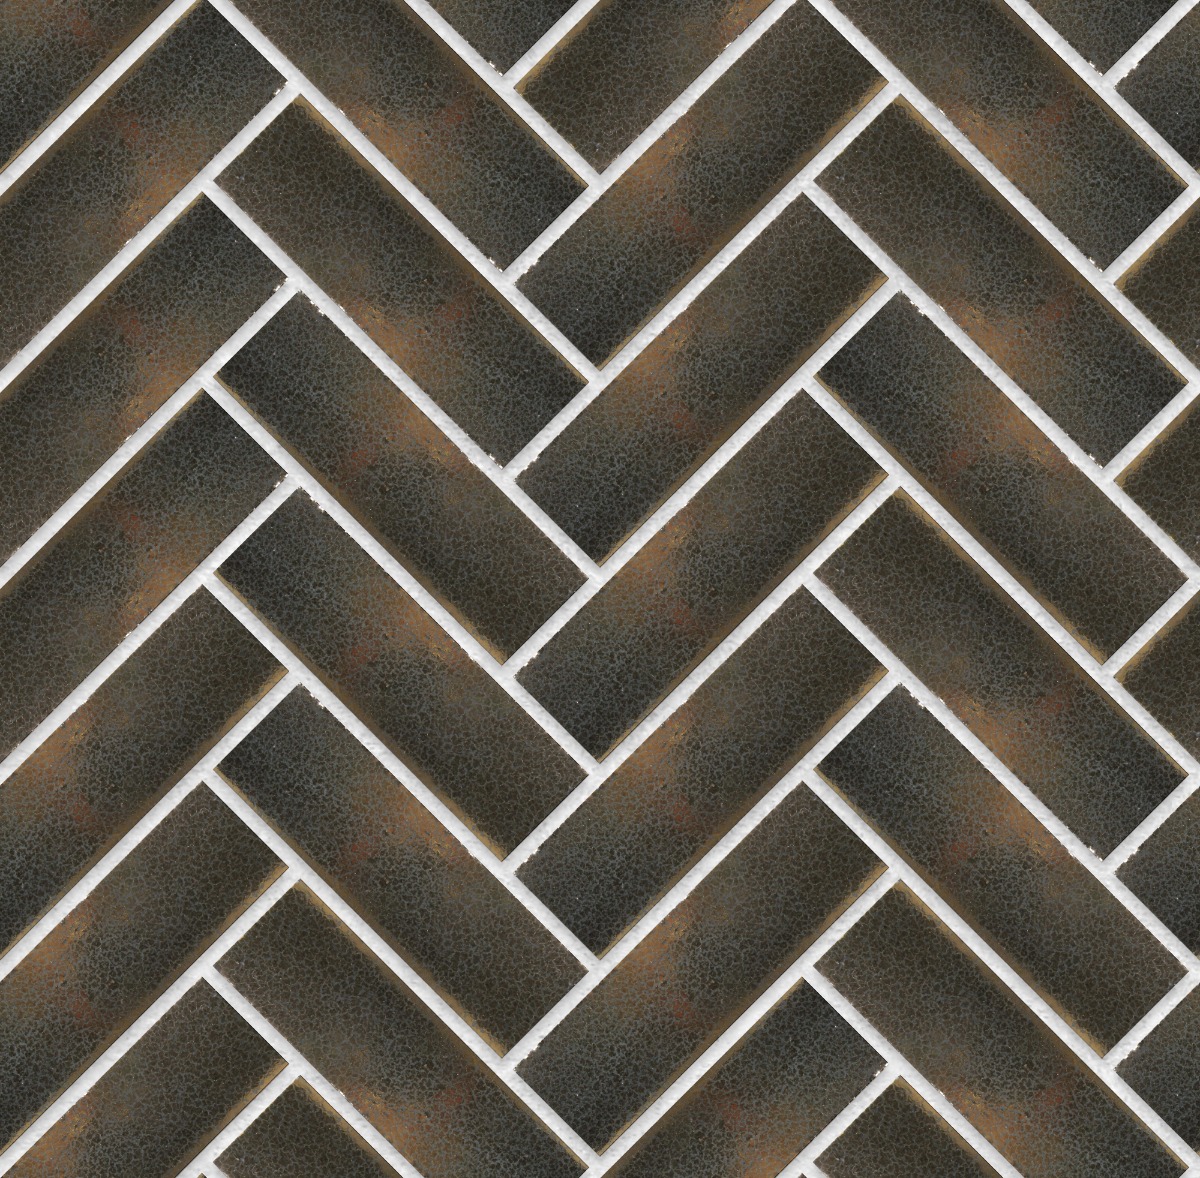 A seamless brick texture with eco-glazed brick slips - weathered bronze units arranged in a Herringbone pattern